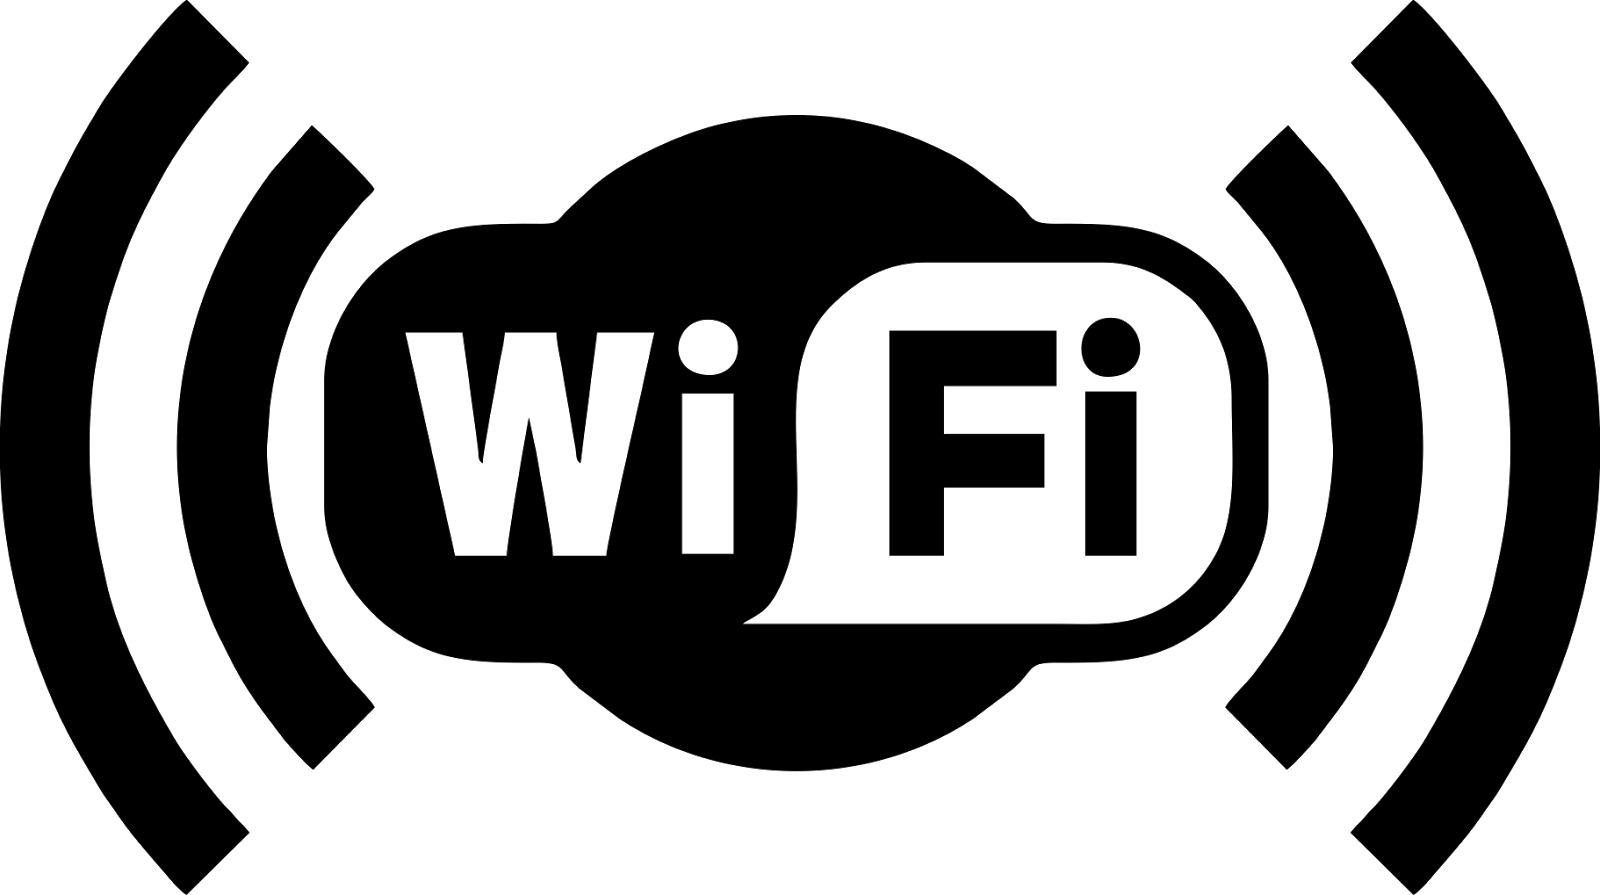 Black Wifi Logo PNG Image Background